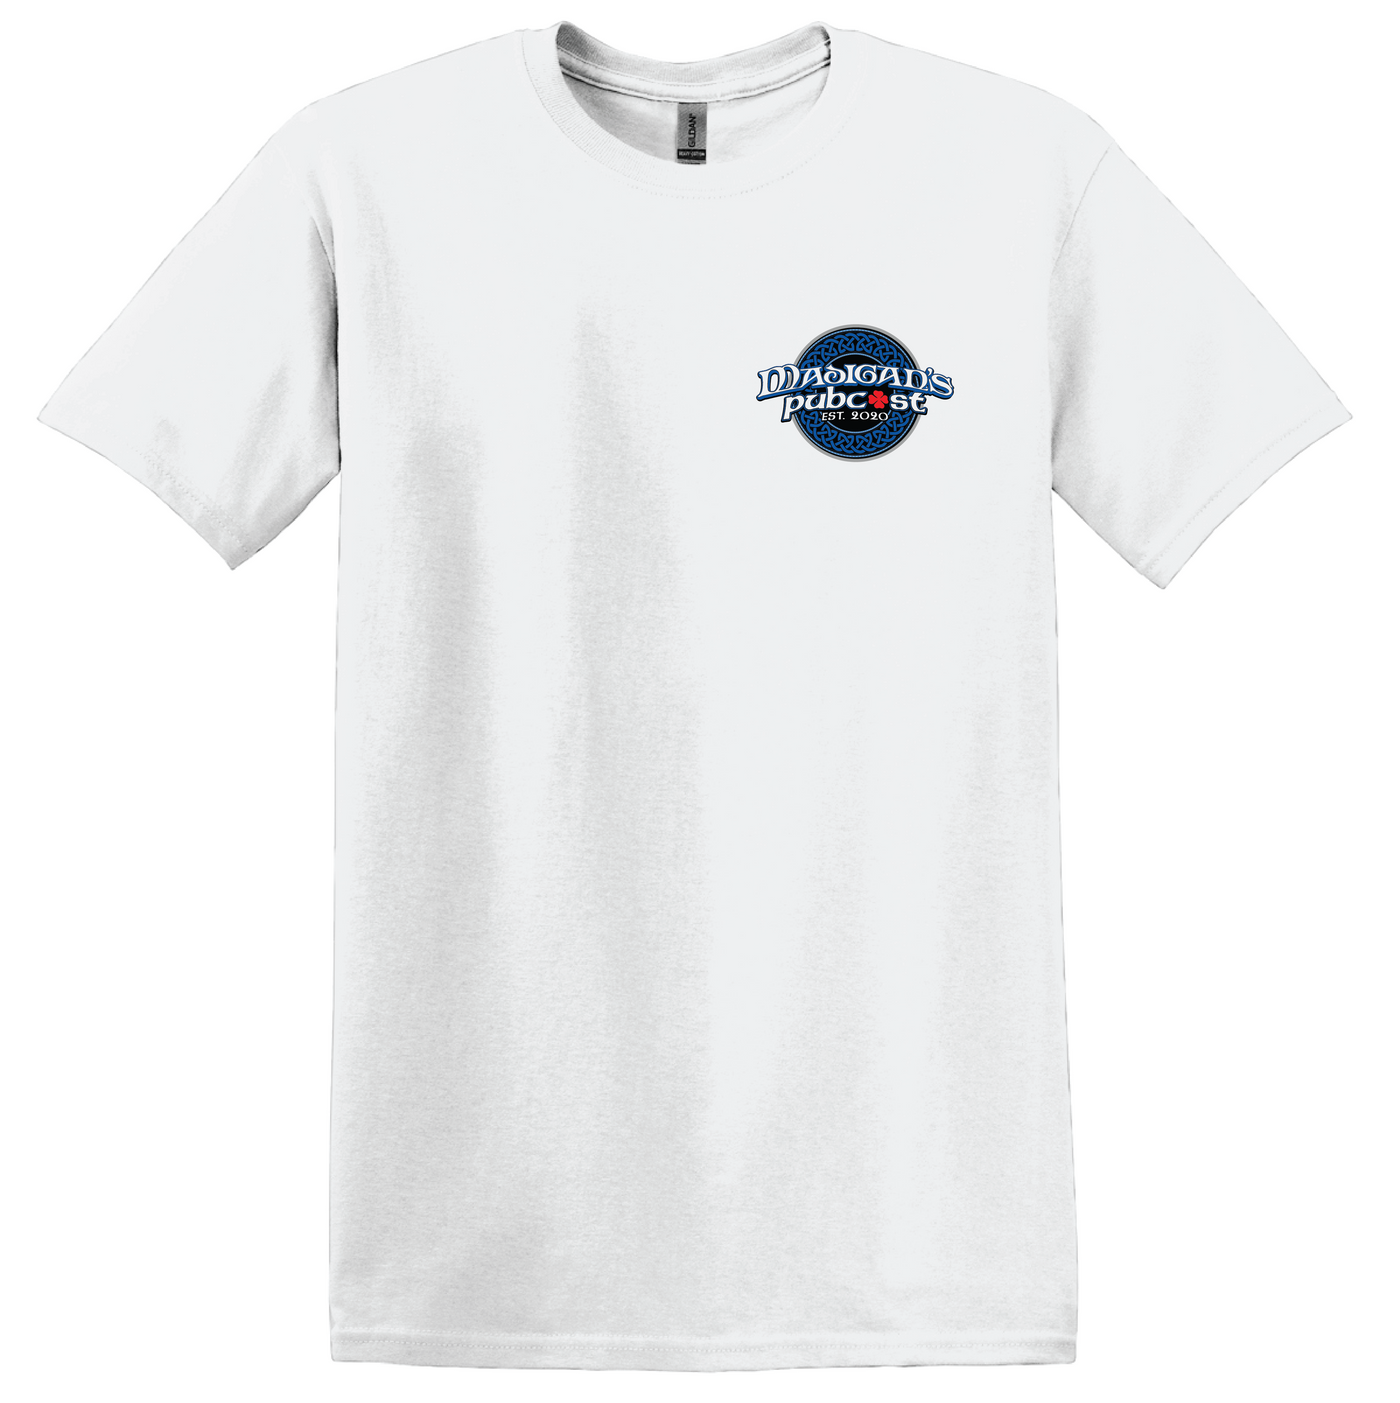 Official “YEAH, NO” Union T-shirt